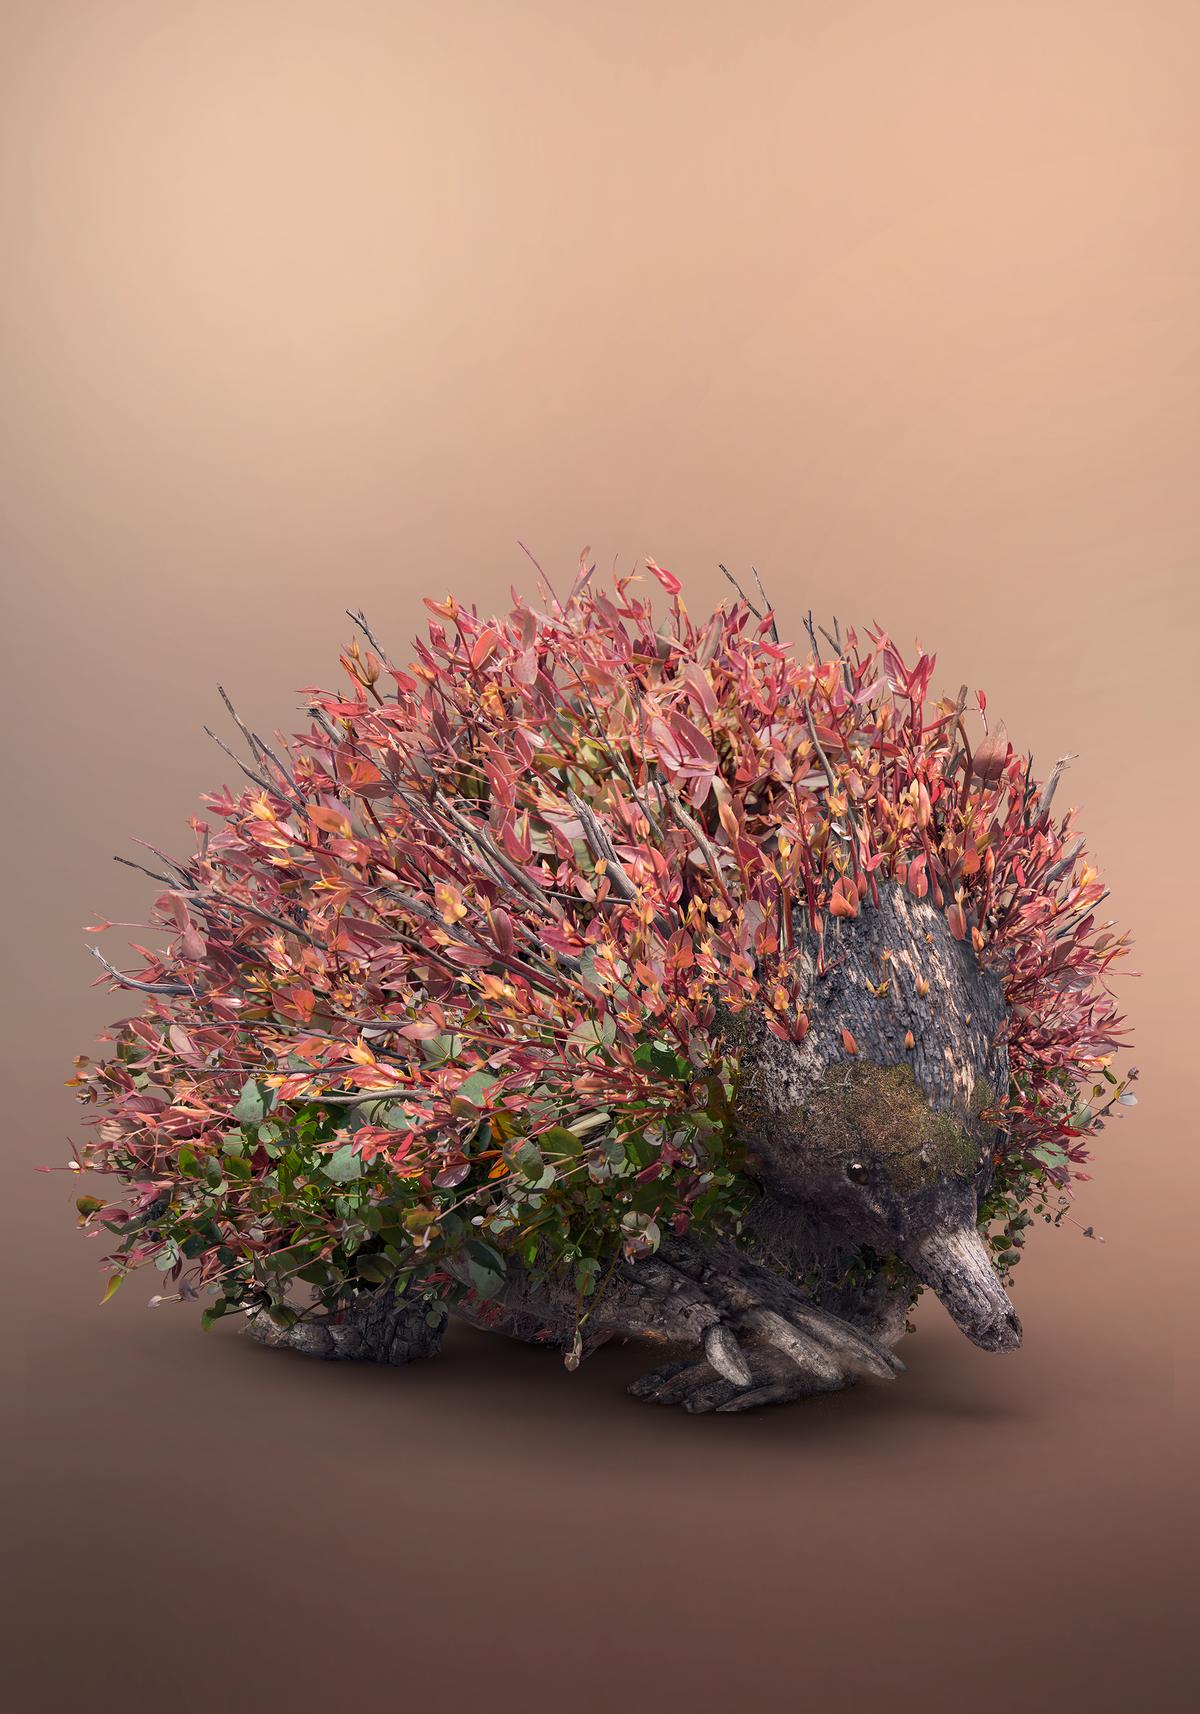 An echidna is created by using photos of gum tree shoots in Dykgaard's "Bushfire" series. (Courtesy of <a href="https://www.instagram.com/joshdykgraaf/">Josh Dykgraaf</a>)